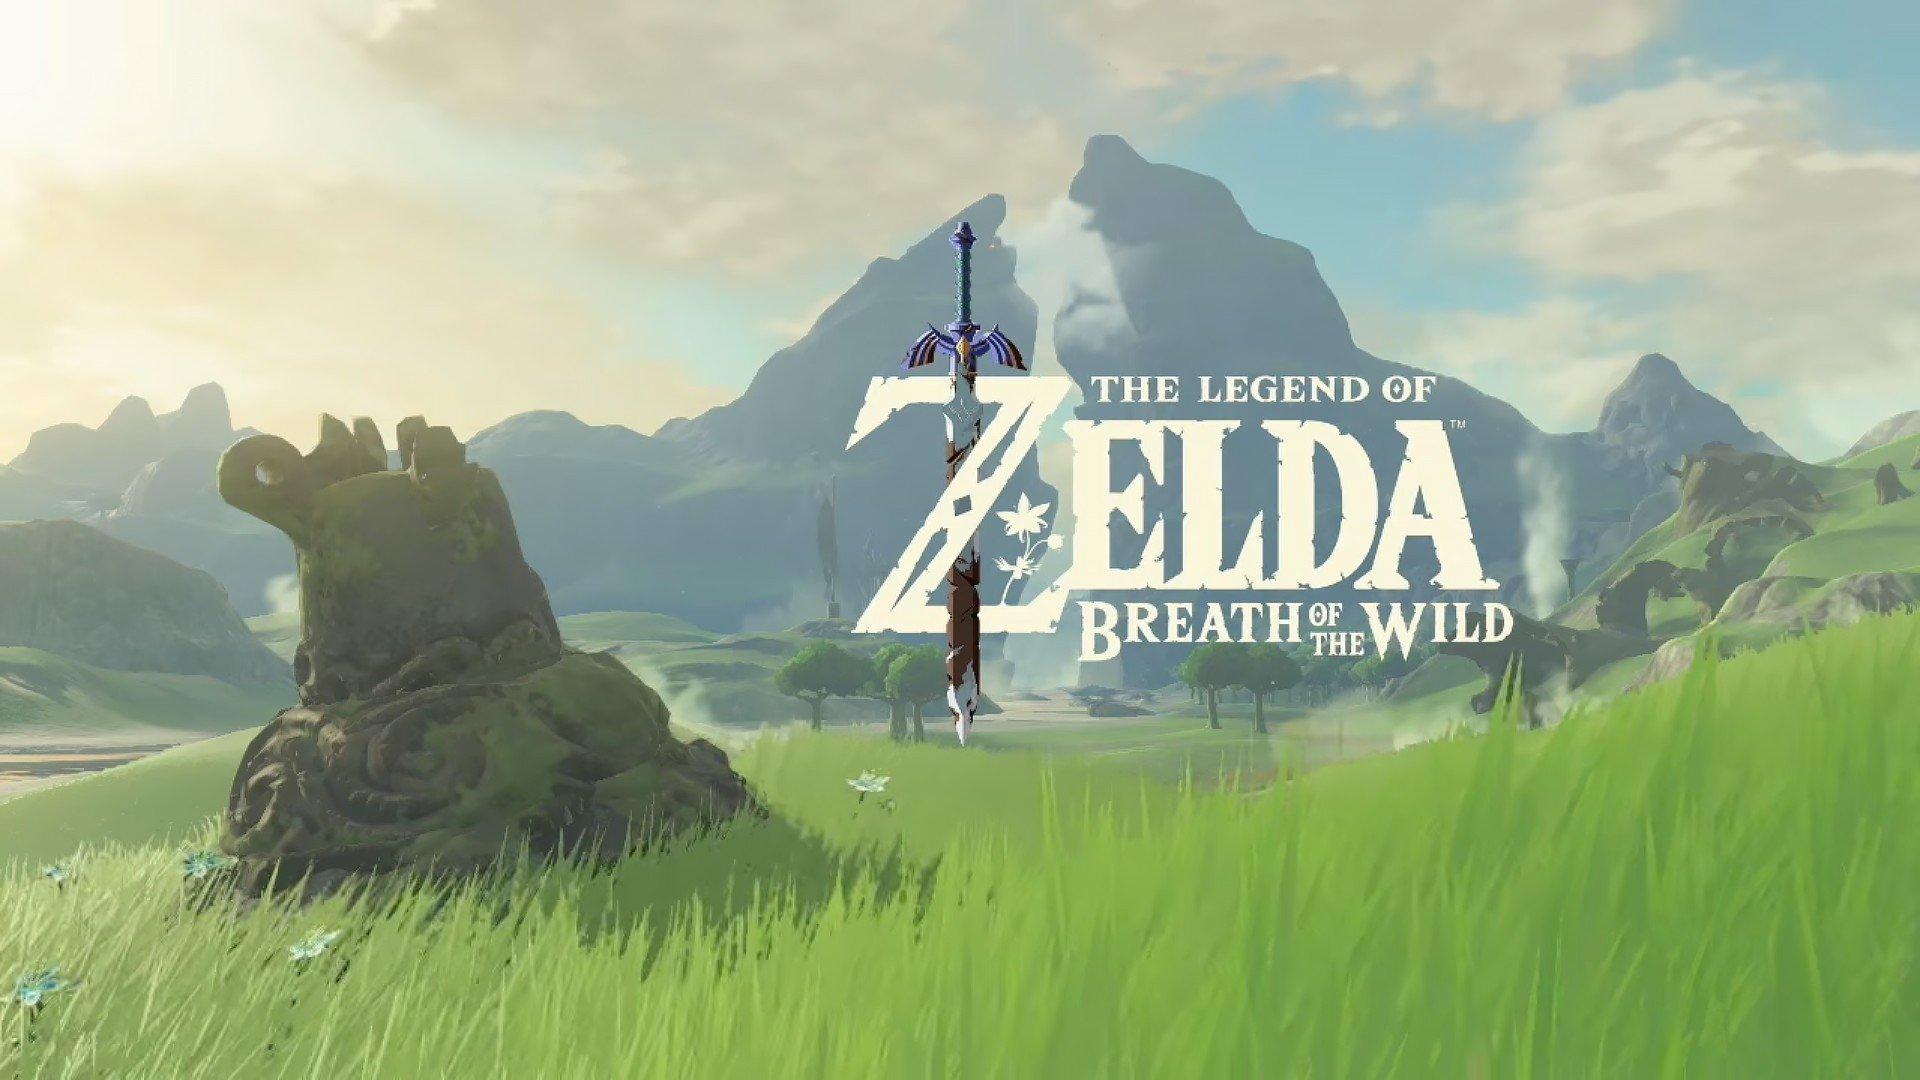 The Legend of Zelda: Breath of the Wild HD Wallpaper. Background